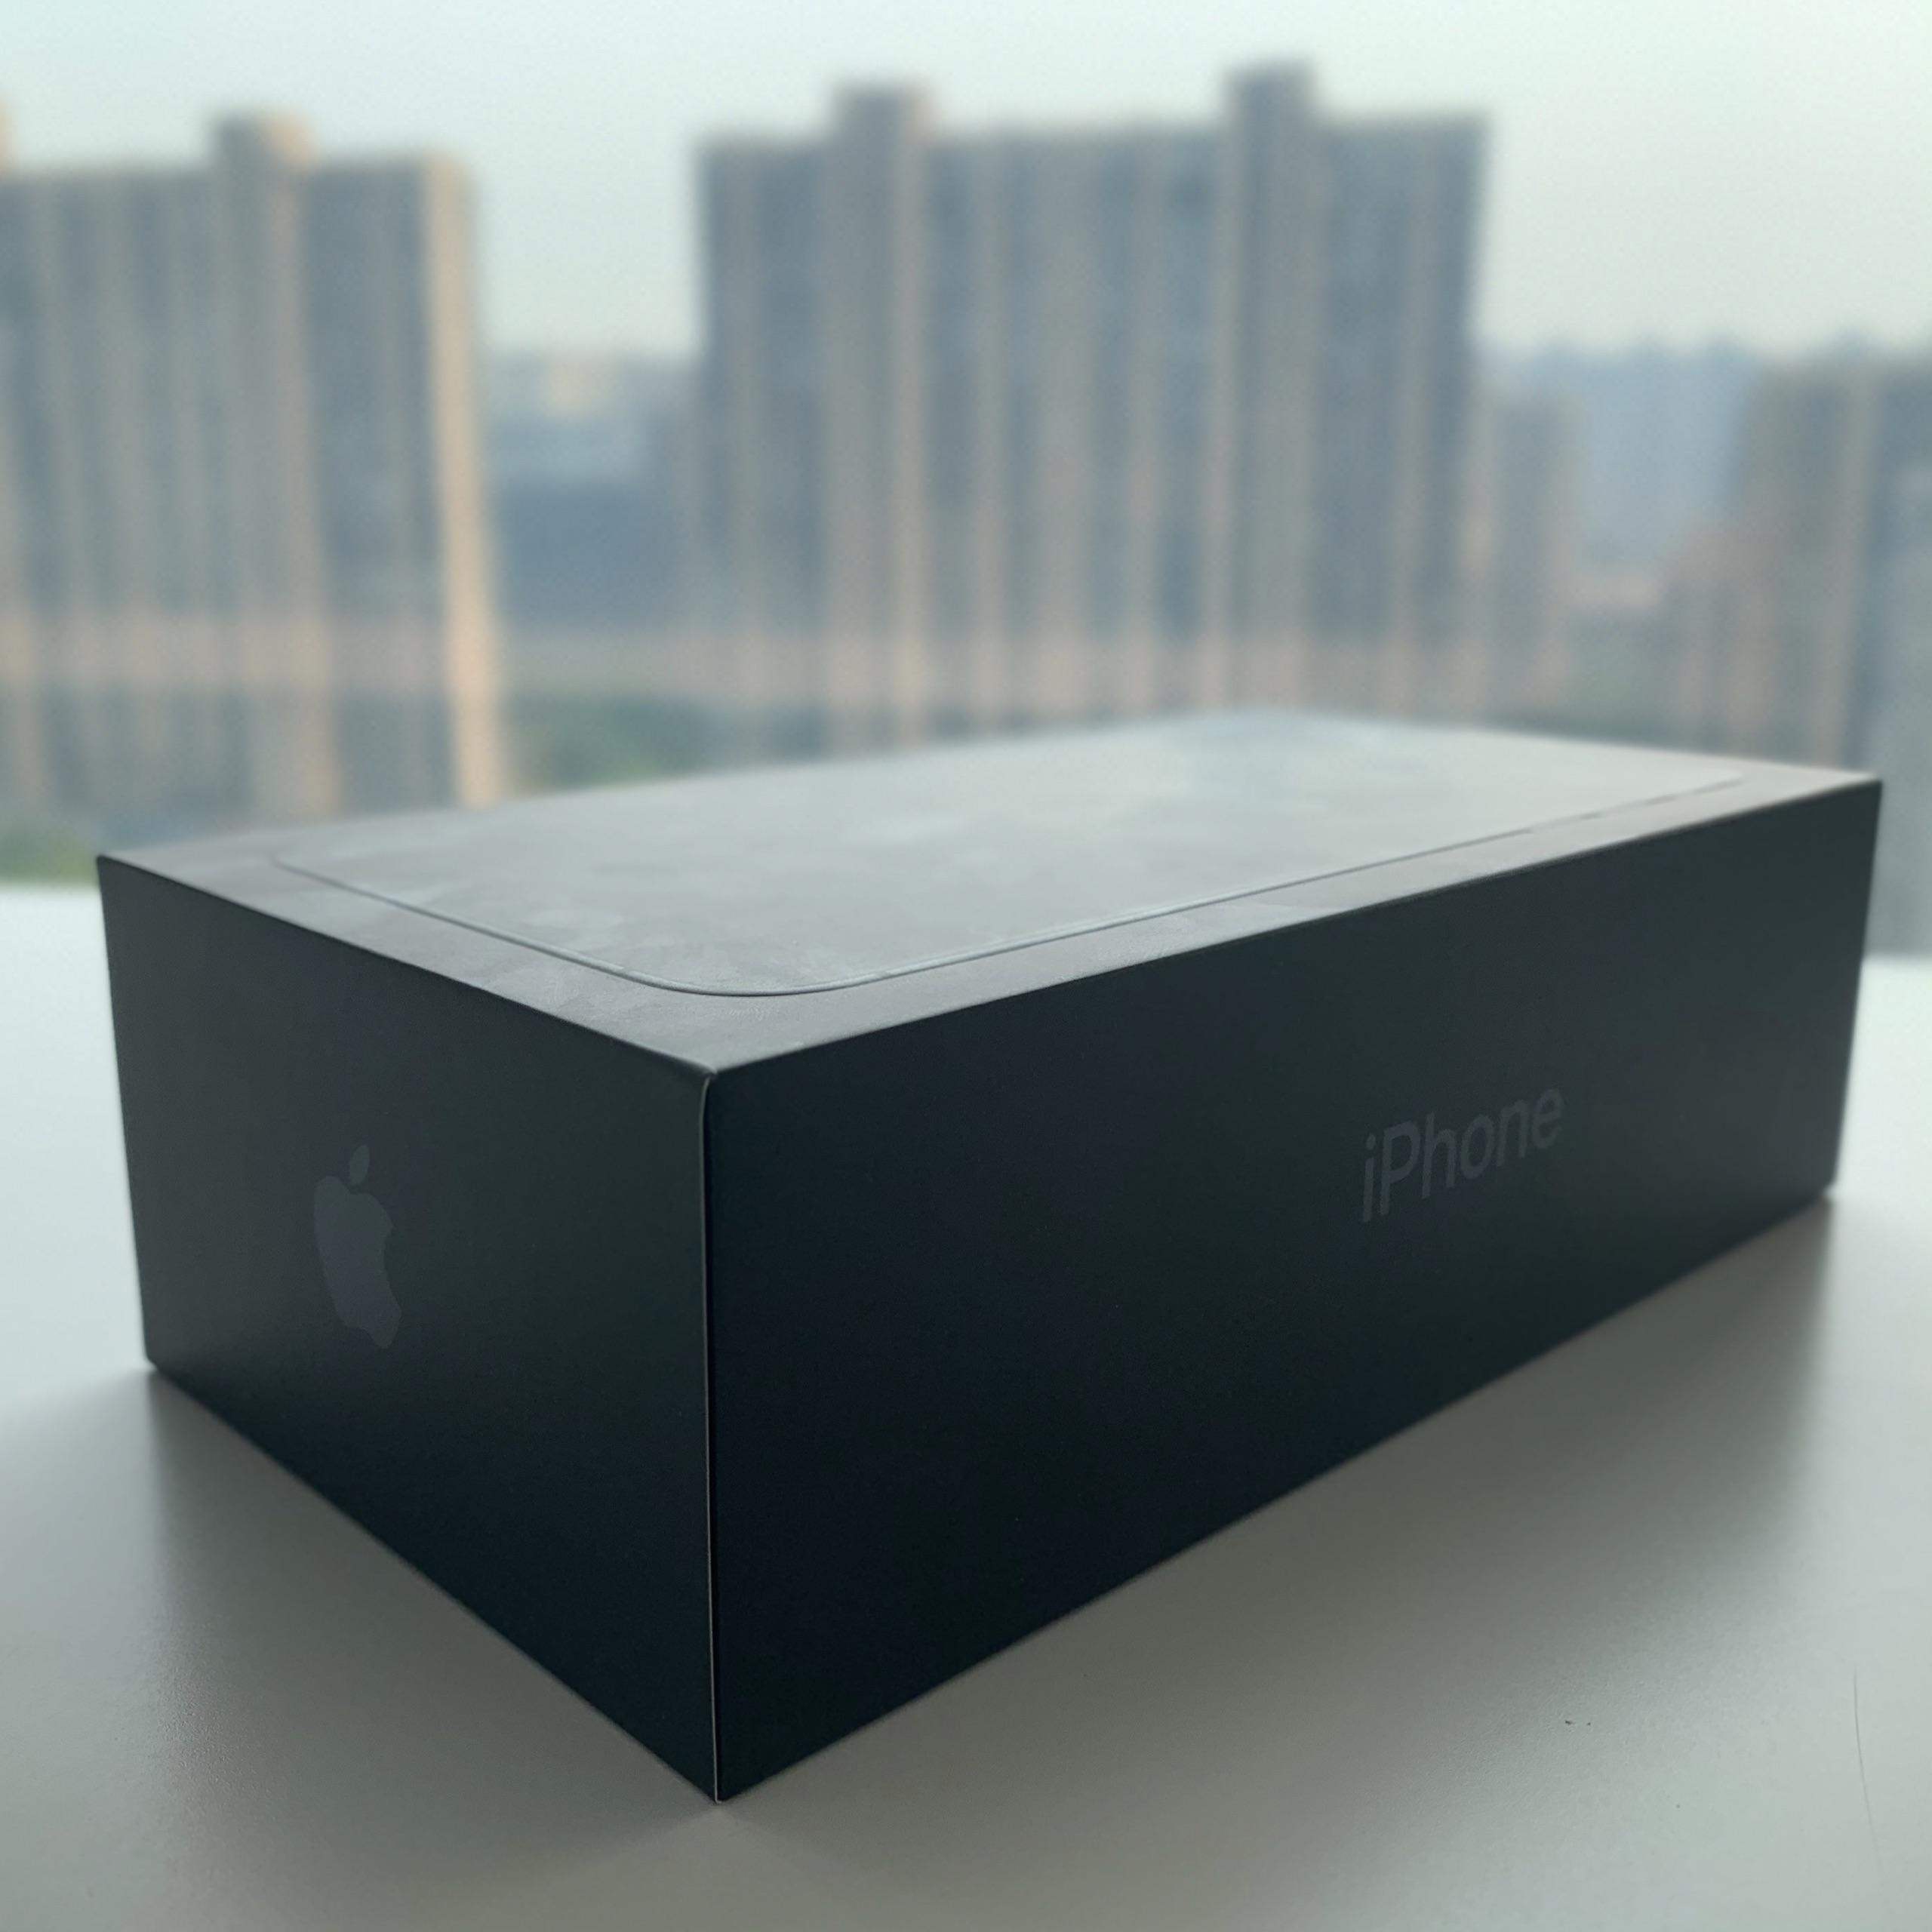 iphone 11 pro 系列外包装采用黑色的包装,与 iphone 11 pro 同等大小